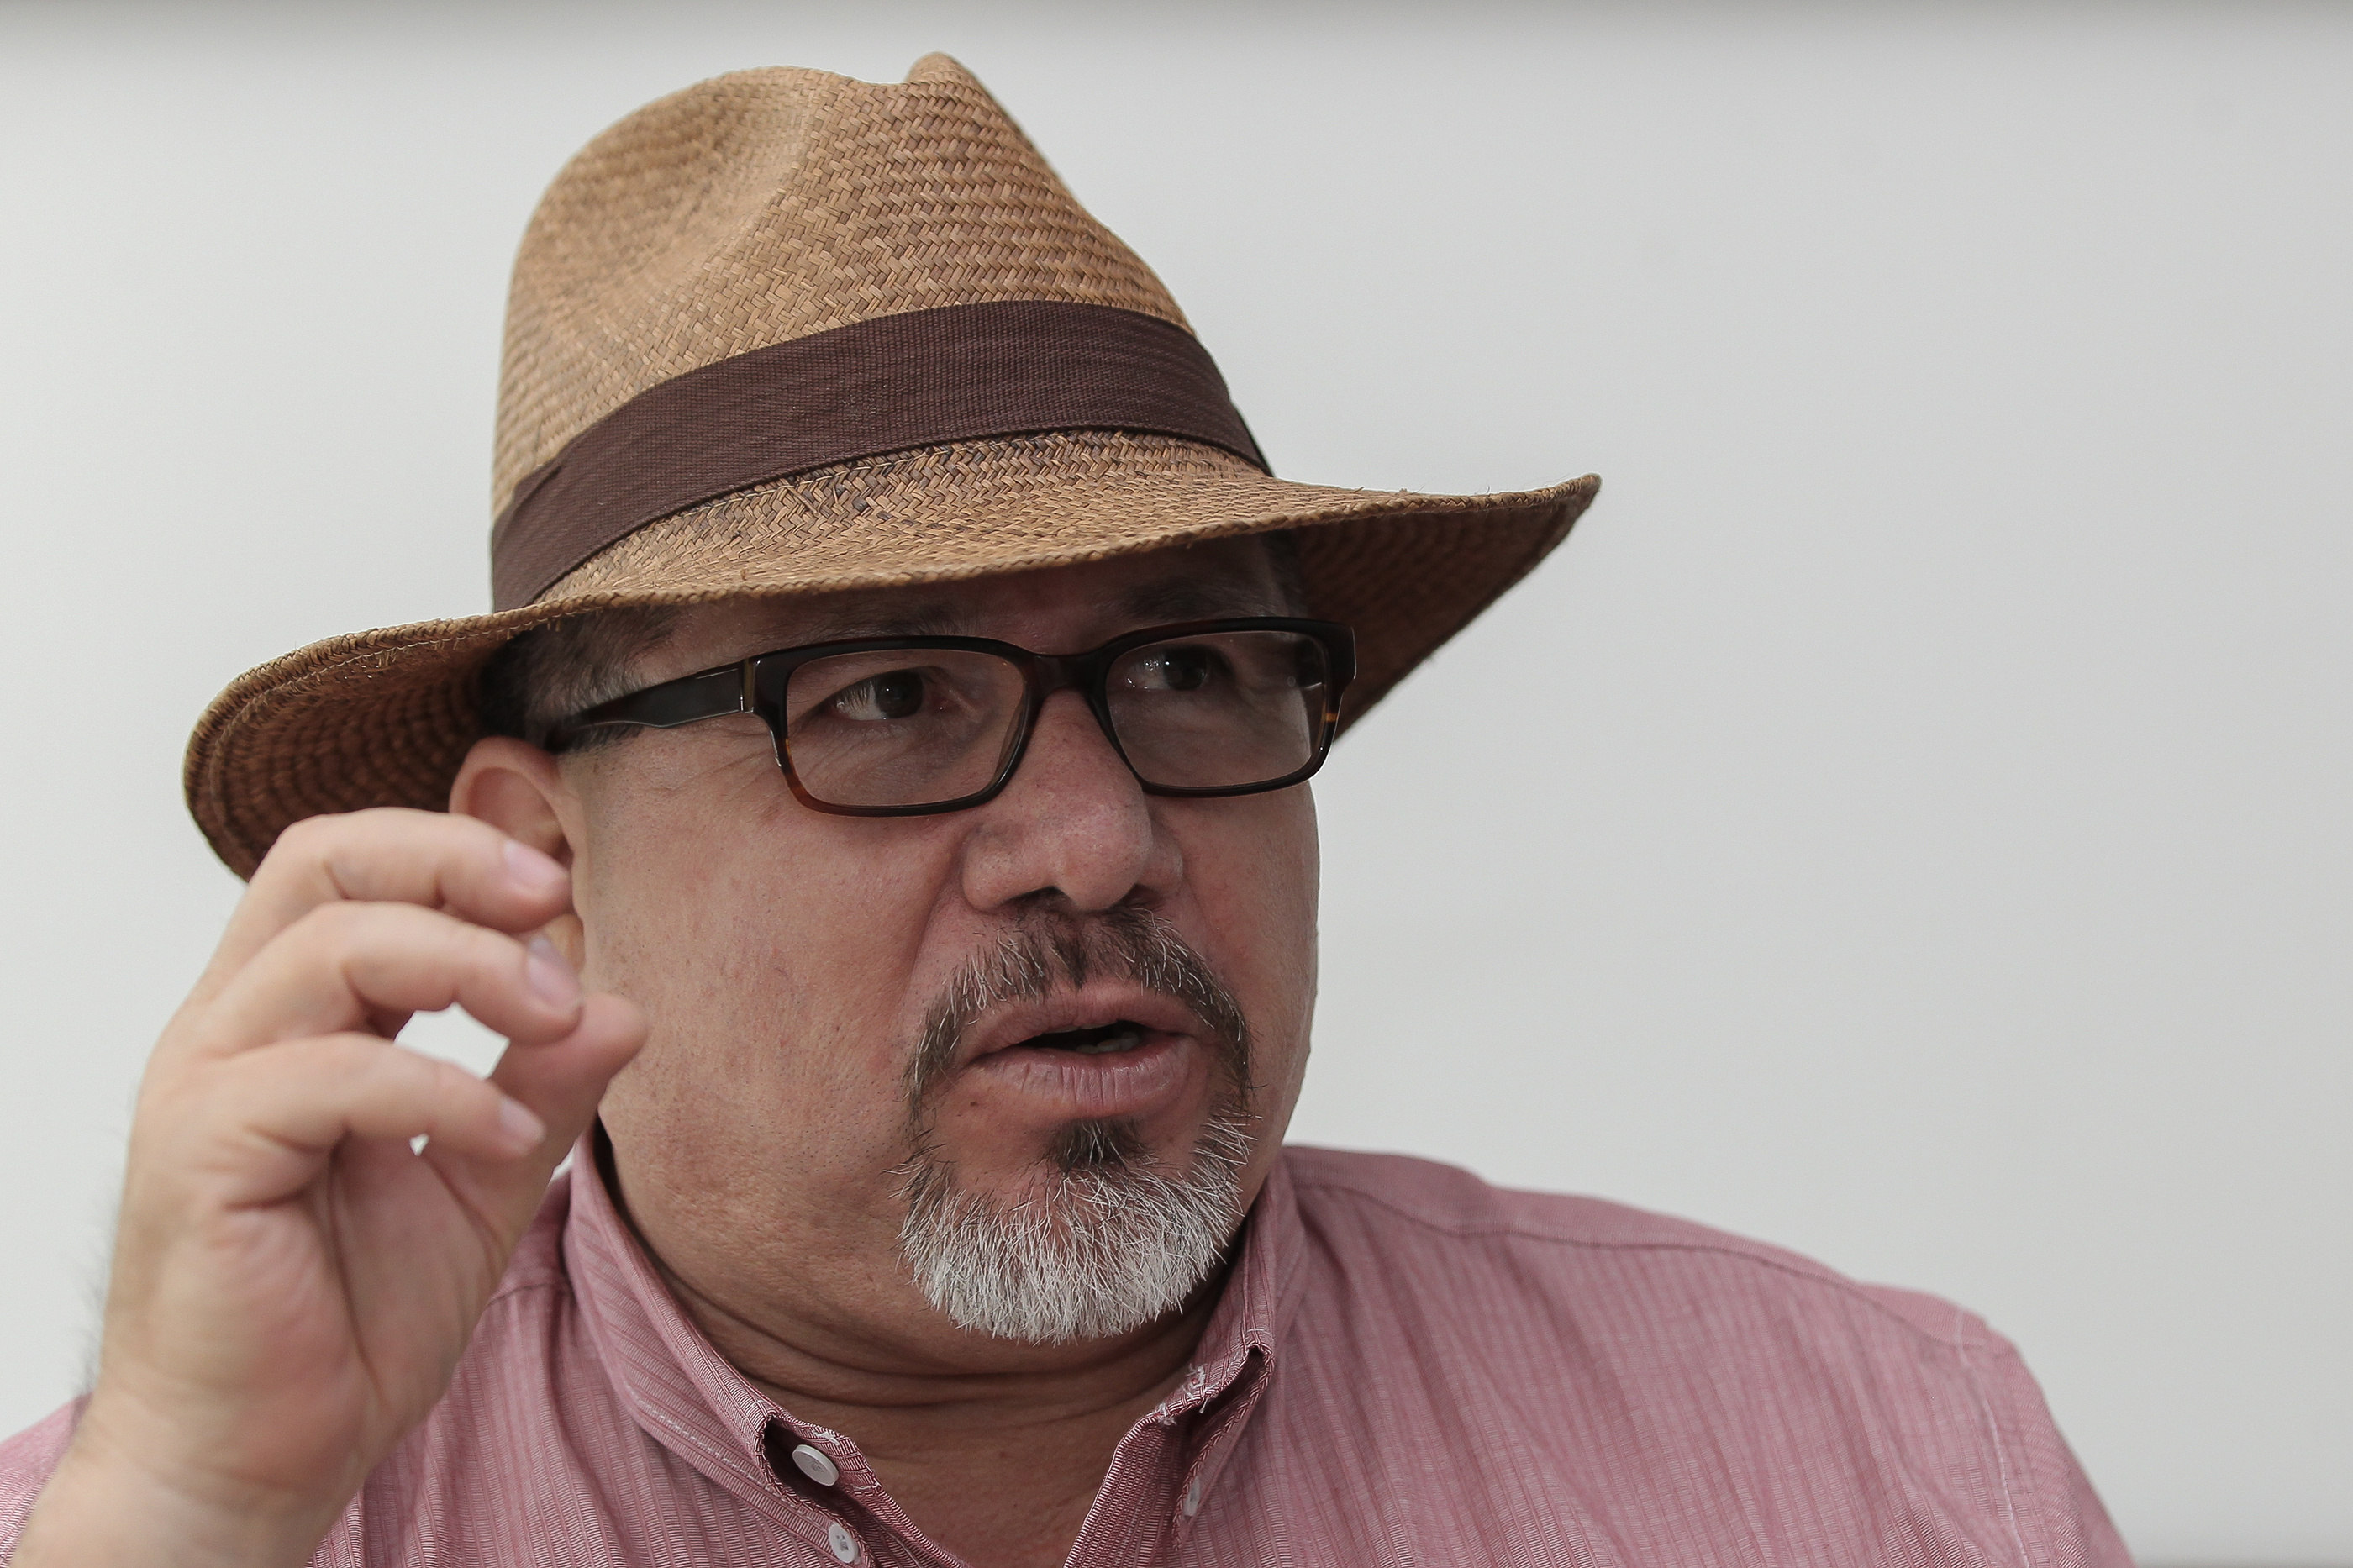  Asesinan al periodista Javier Valdez en Sinaloa